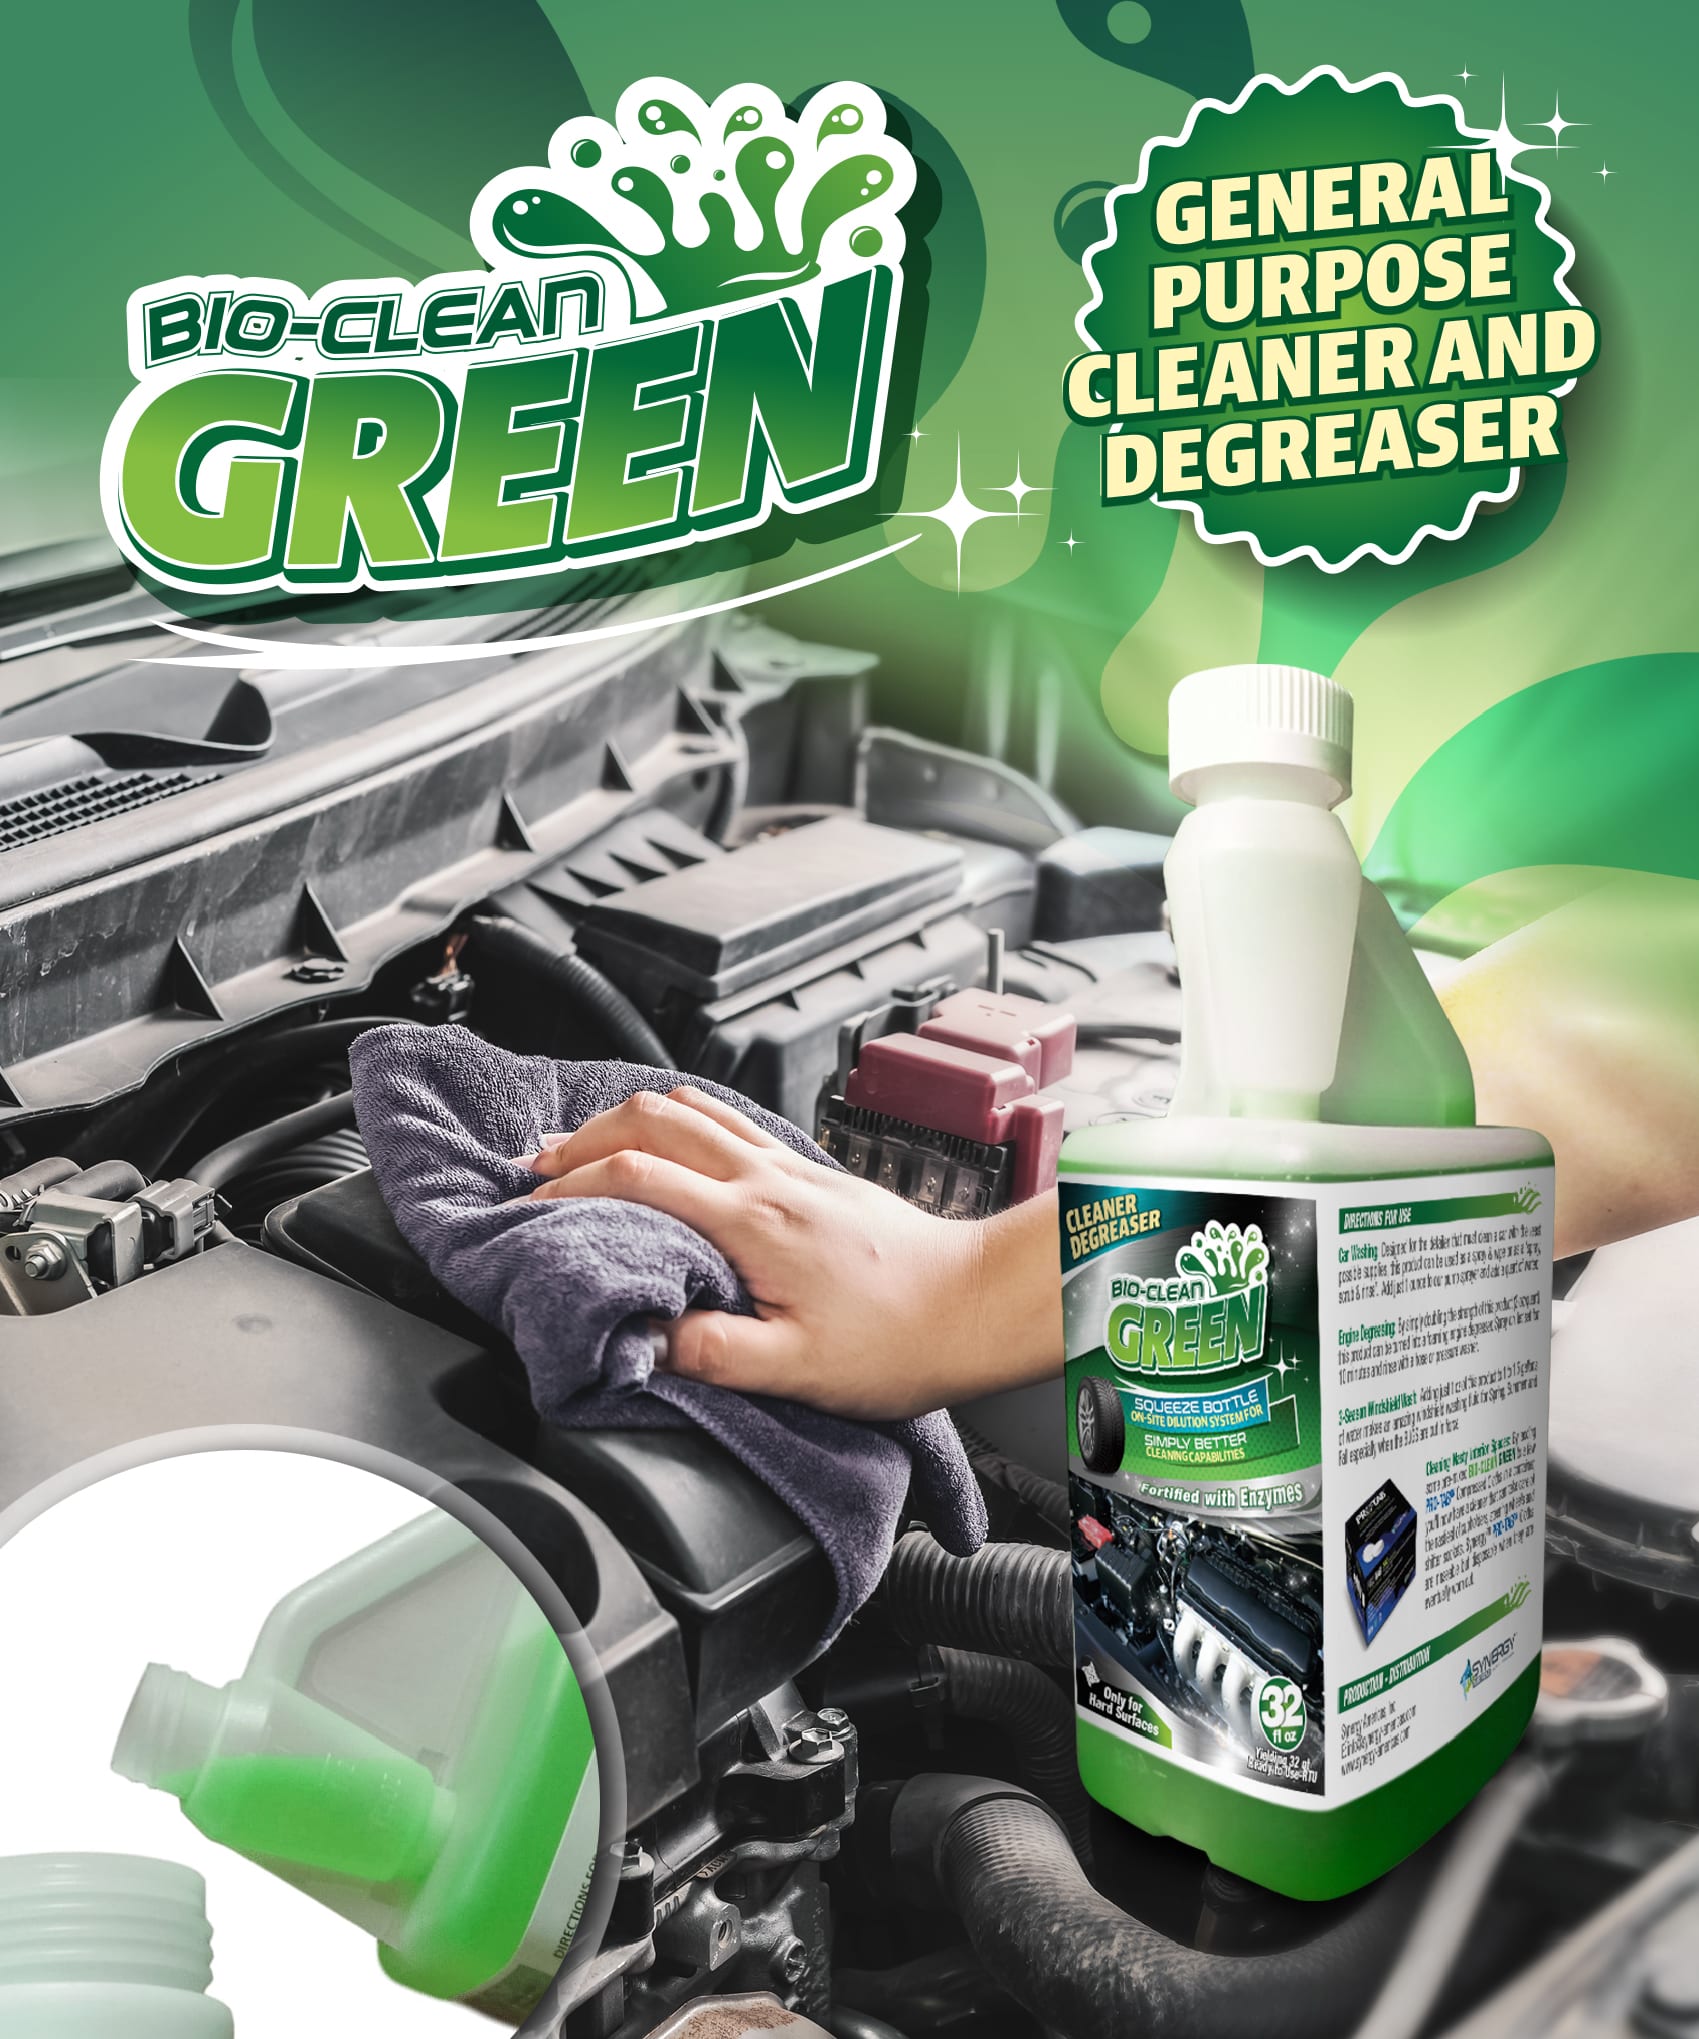 Bio-Clean: GREEN All Purpose Cleaner